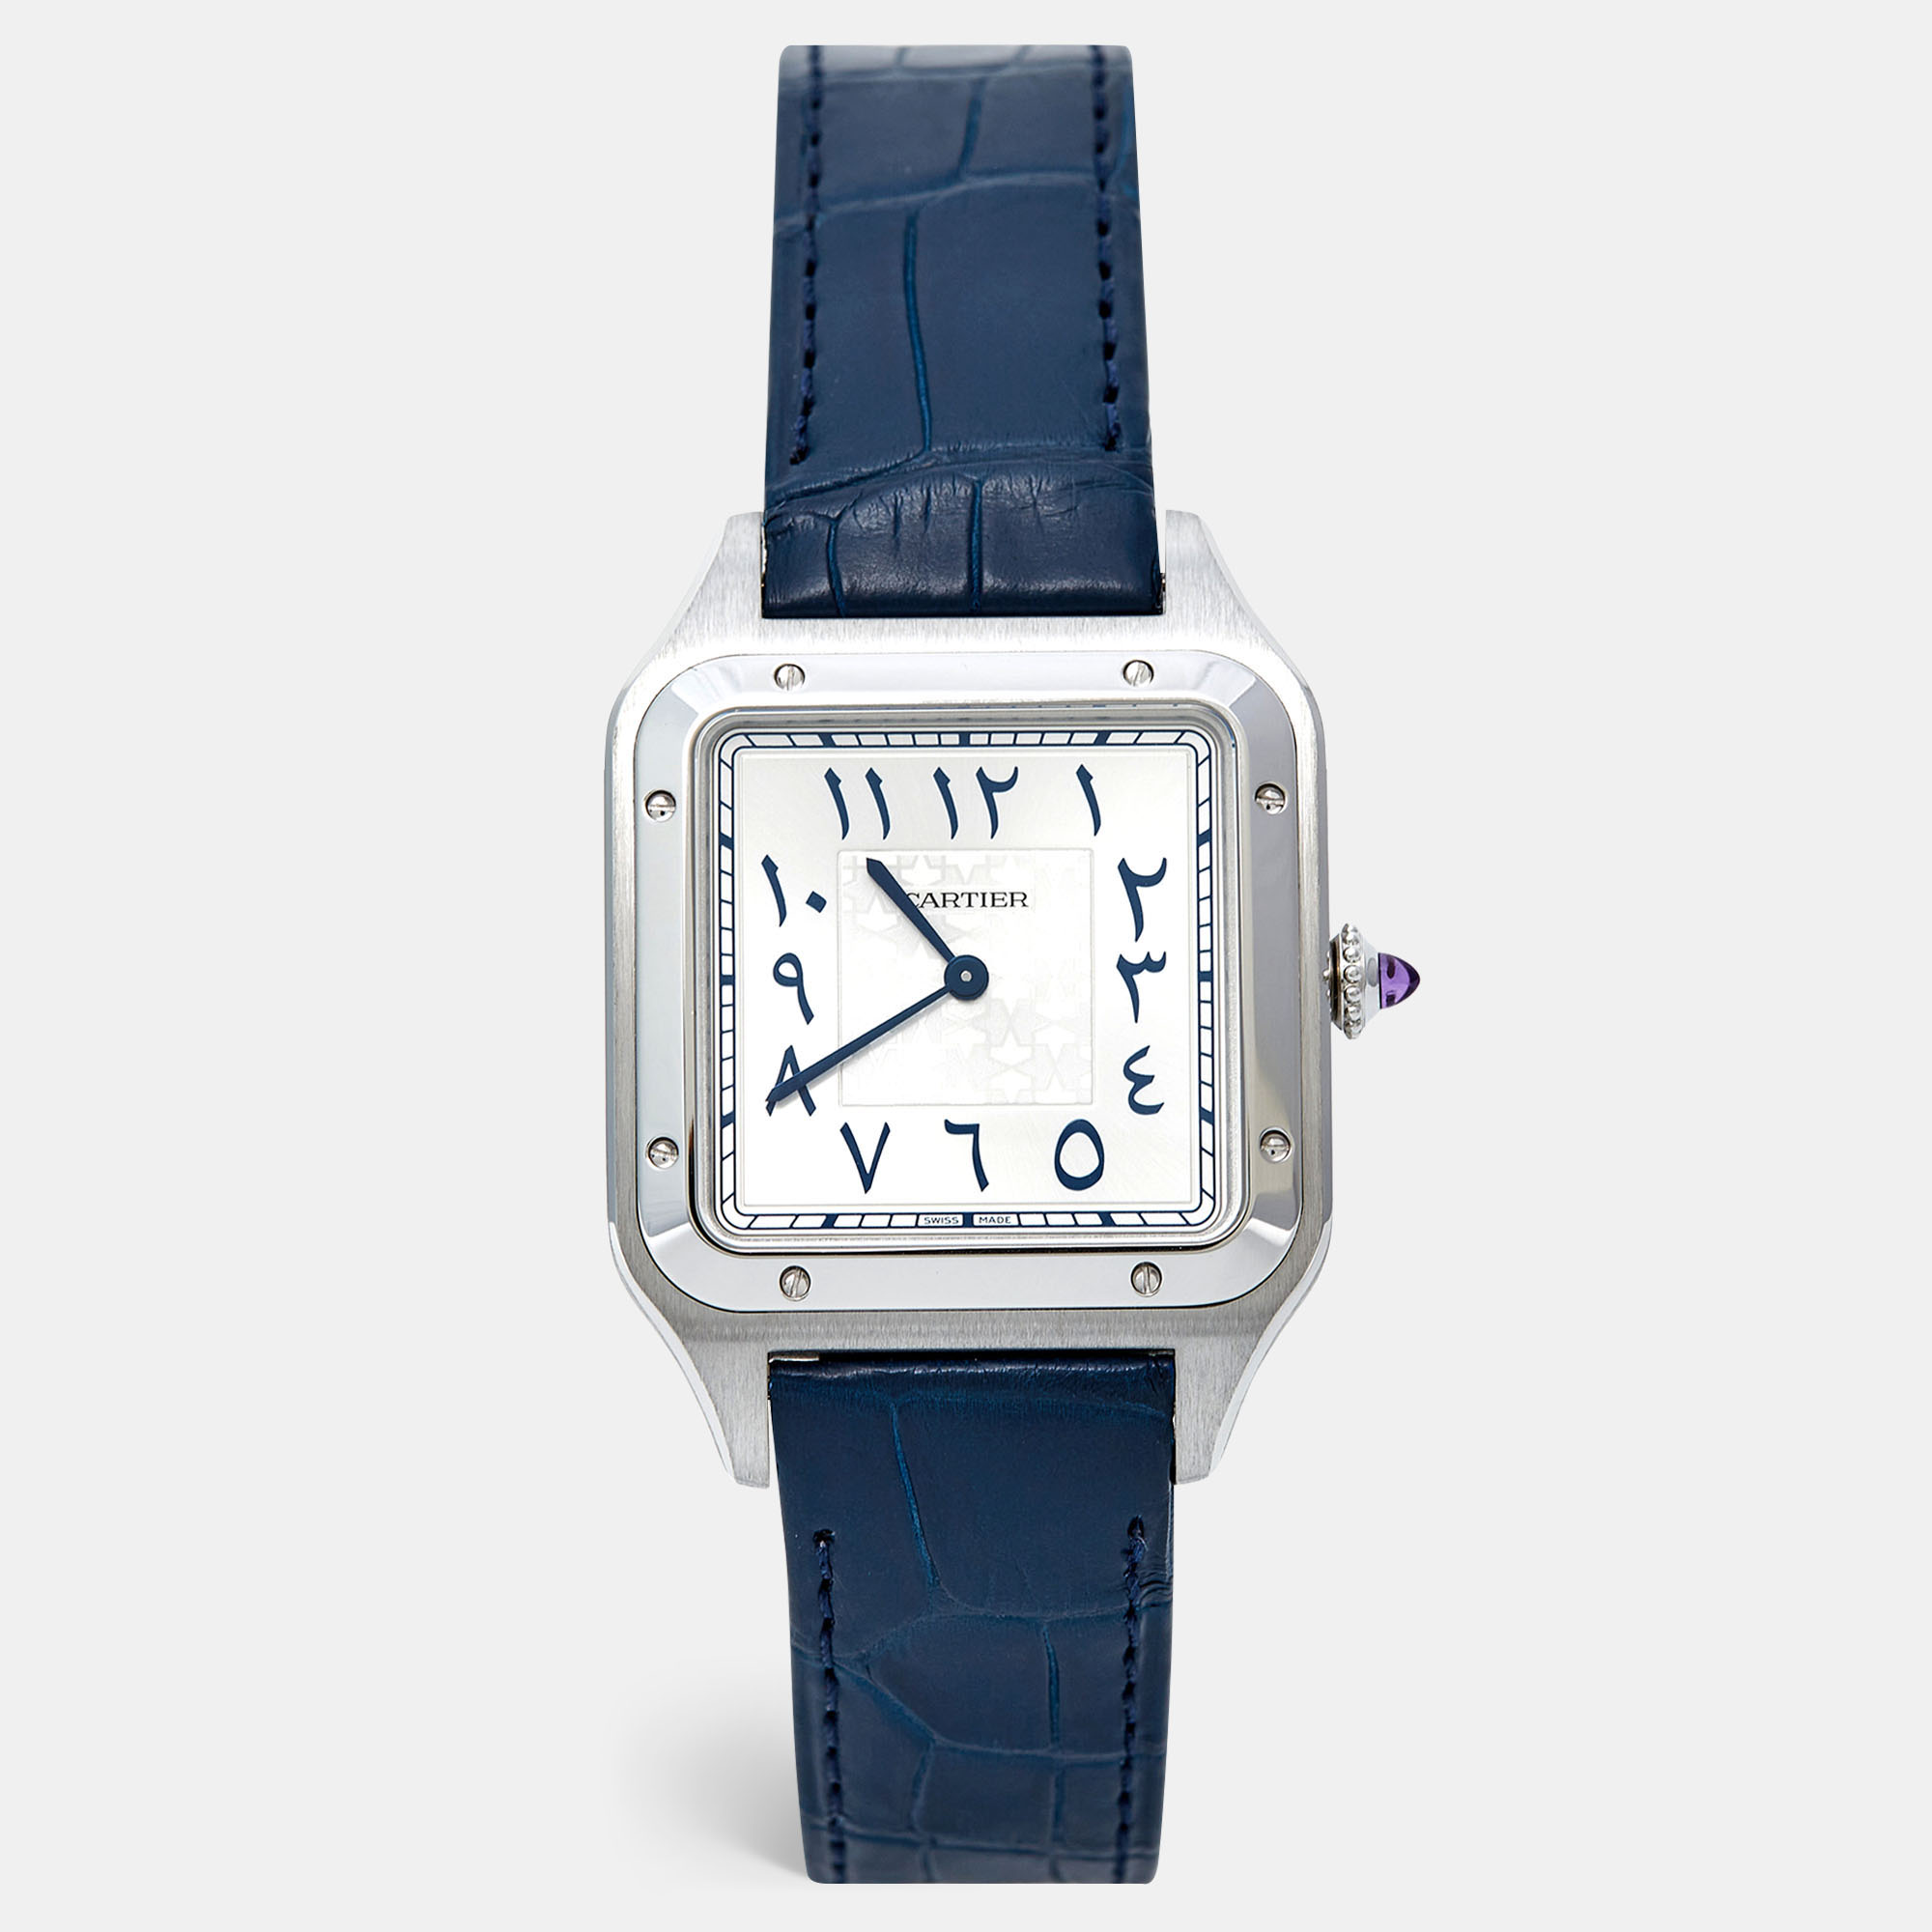 Cartier santos dumont platinum limited edition 200 xl model arabic dial wgsa0086 46.6 mm x 33.9 mm watch